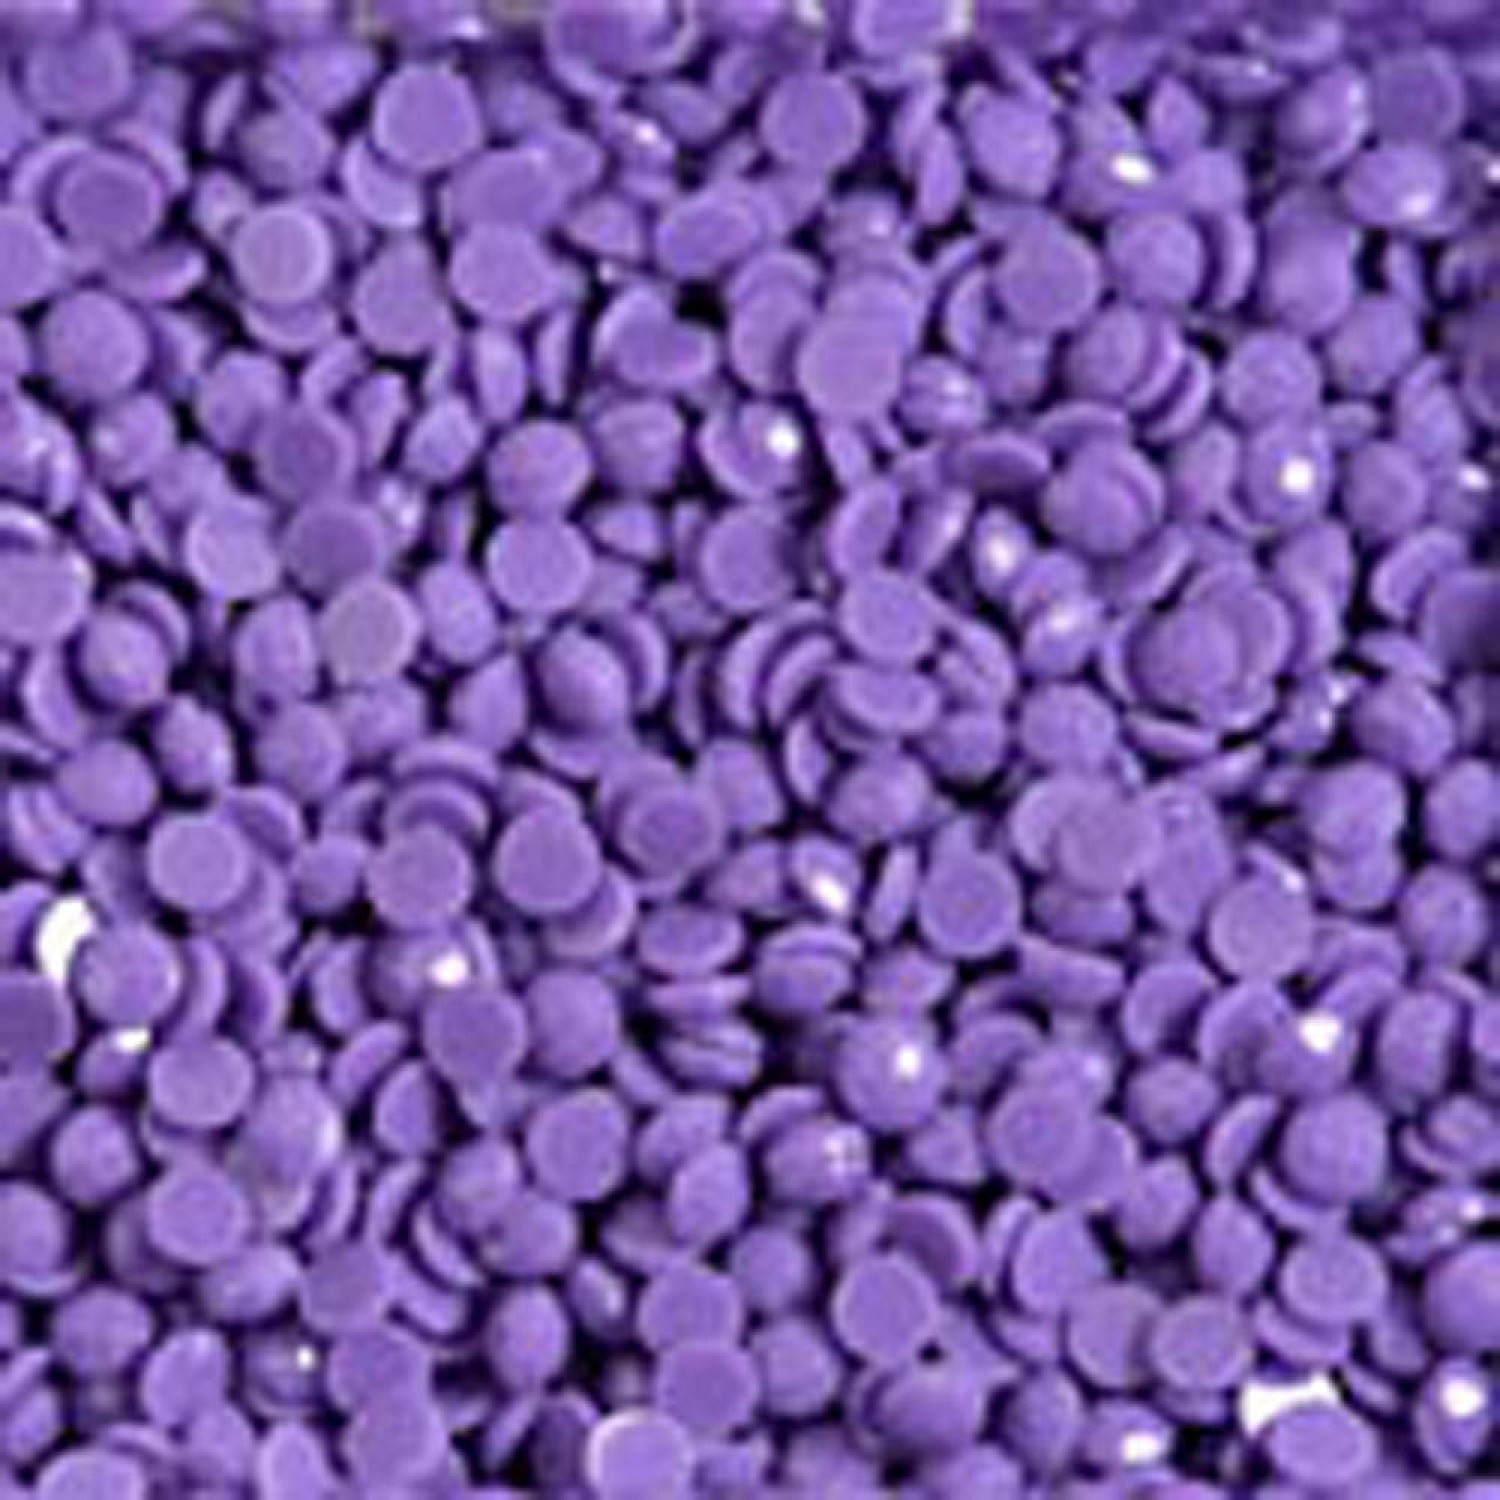 DDPP003 Purple Diamond Pen - Diamond-Dot Painting®